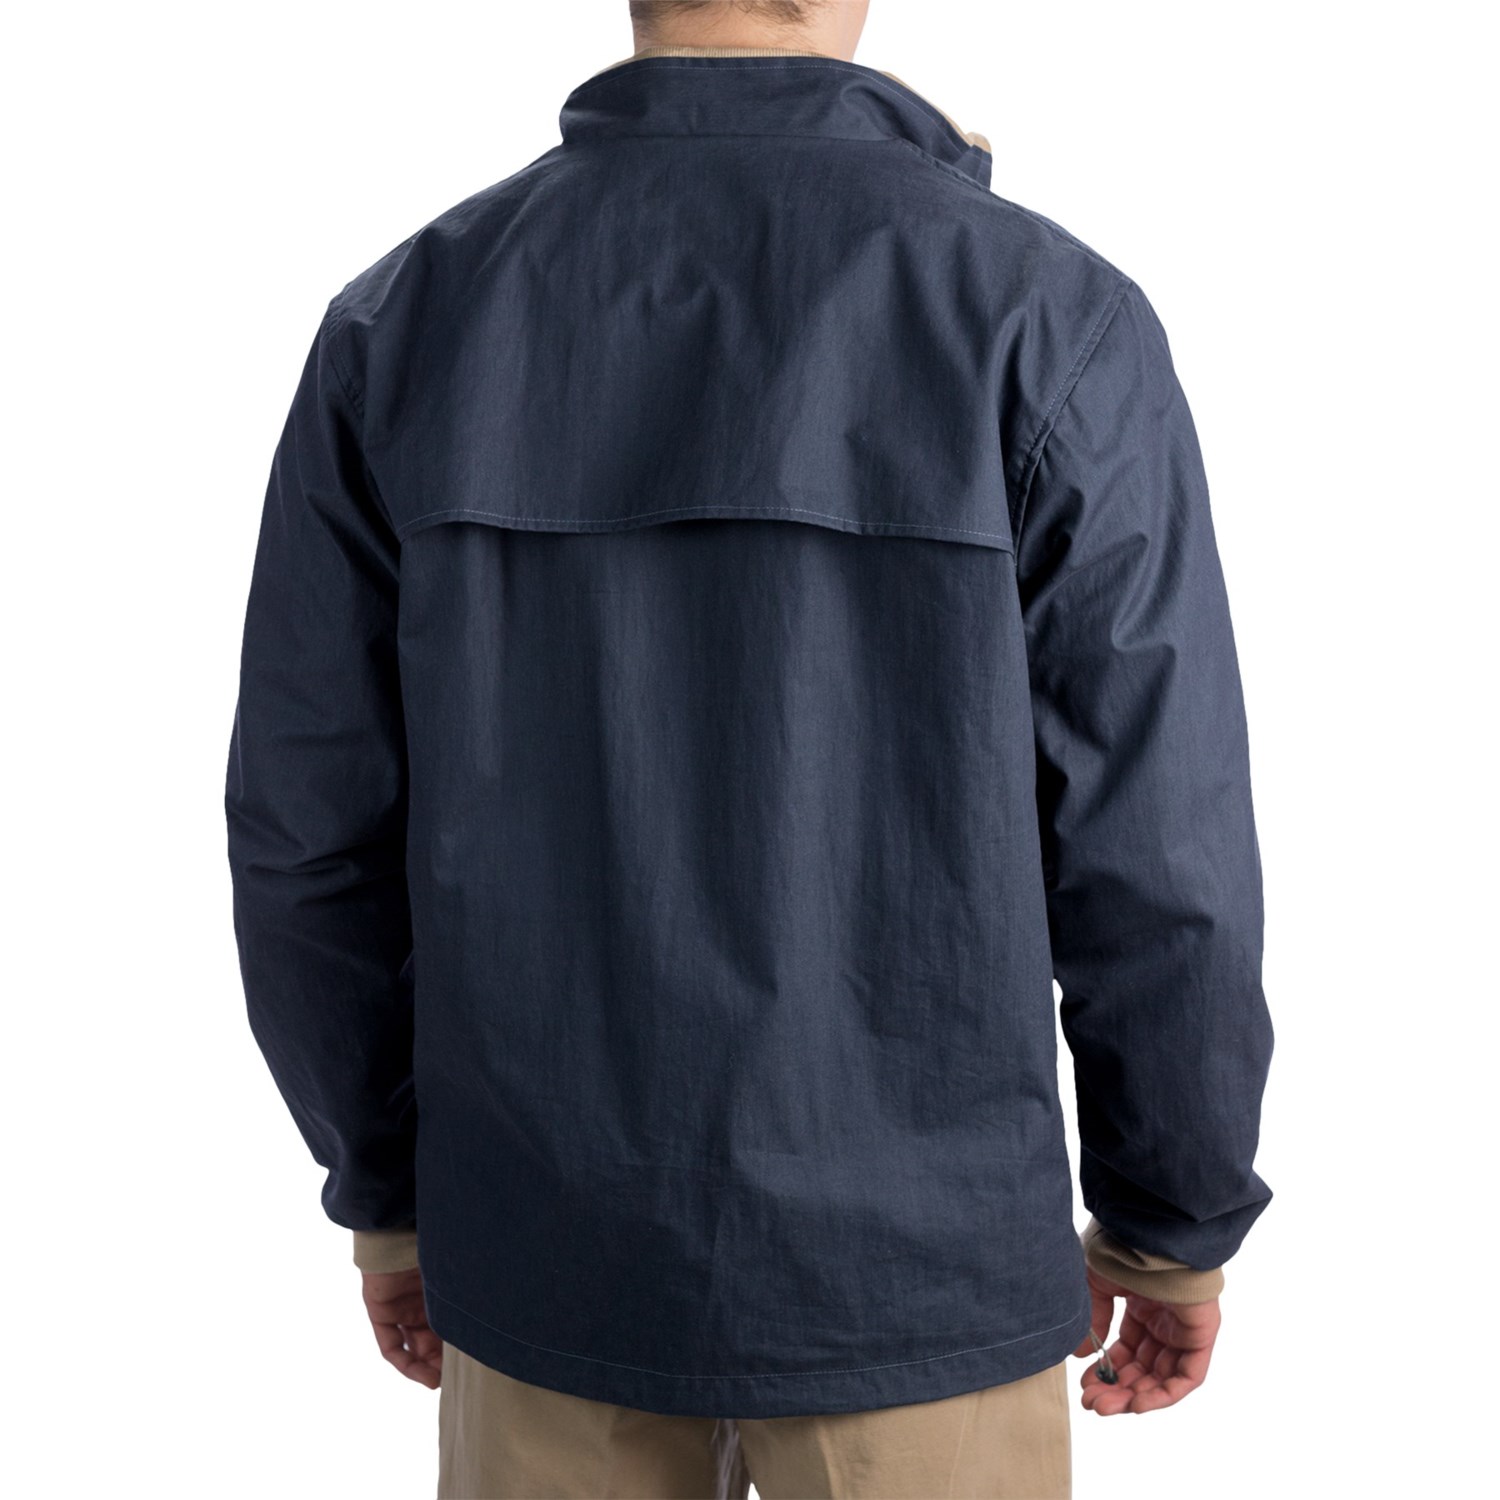 Bills Khakis Reversible Windbreaker Jacket (For Men) 7616M